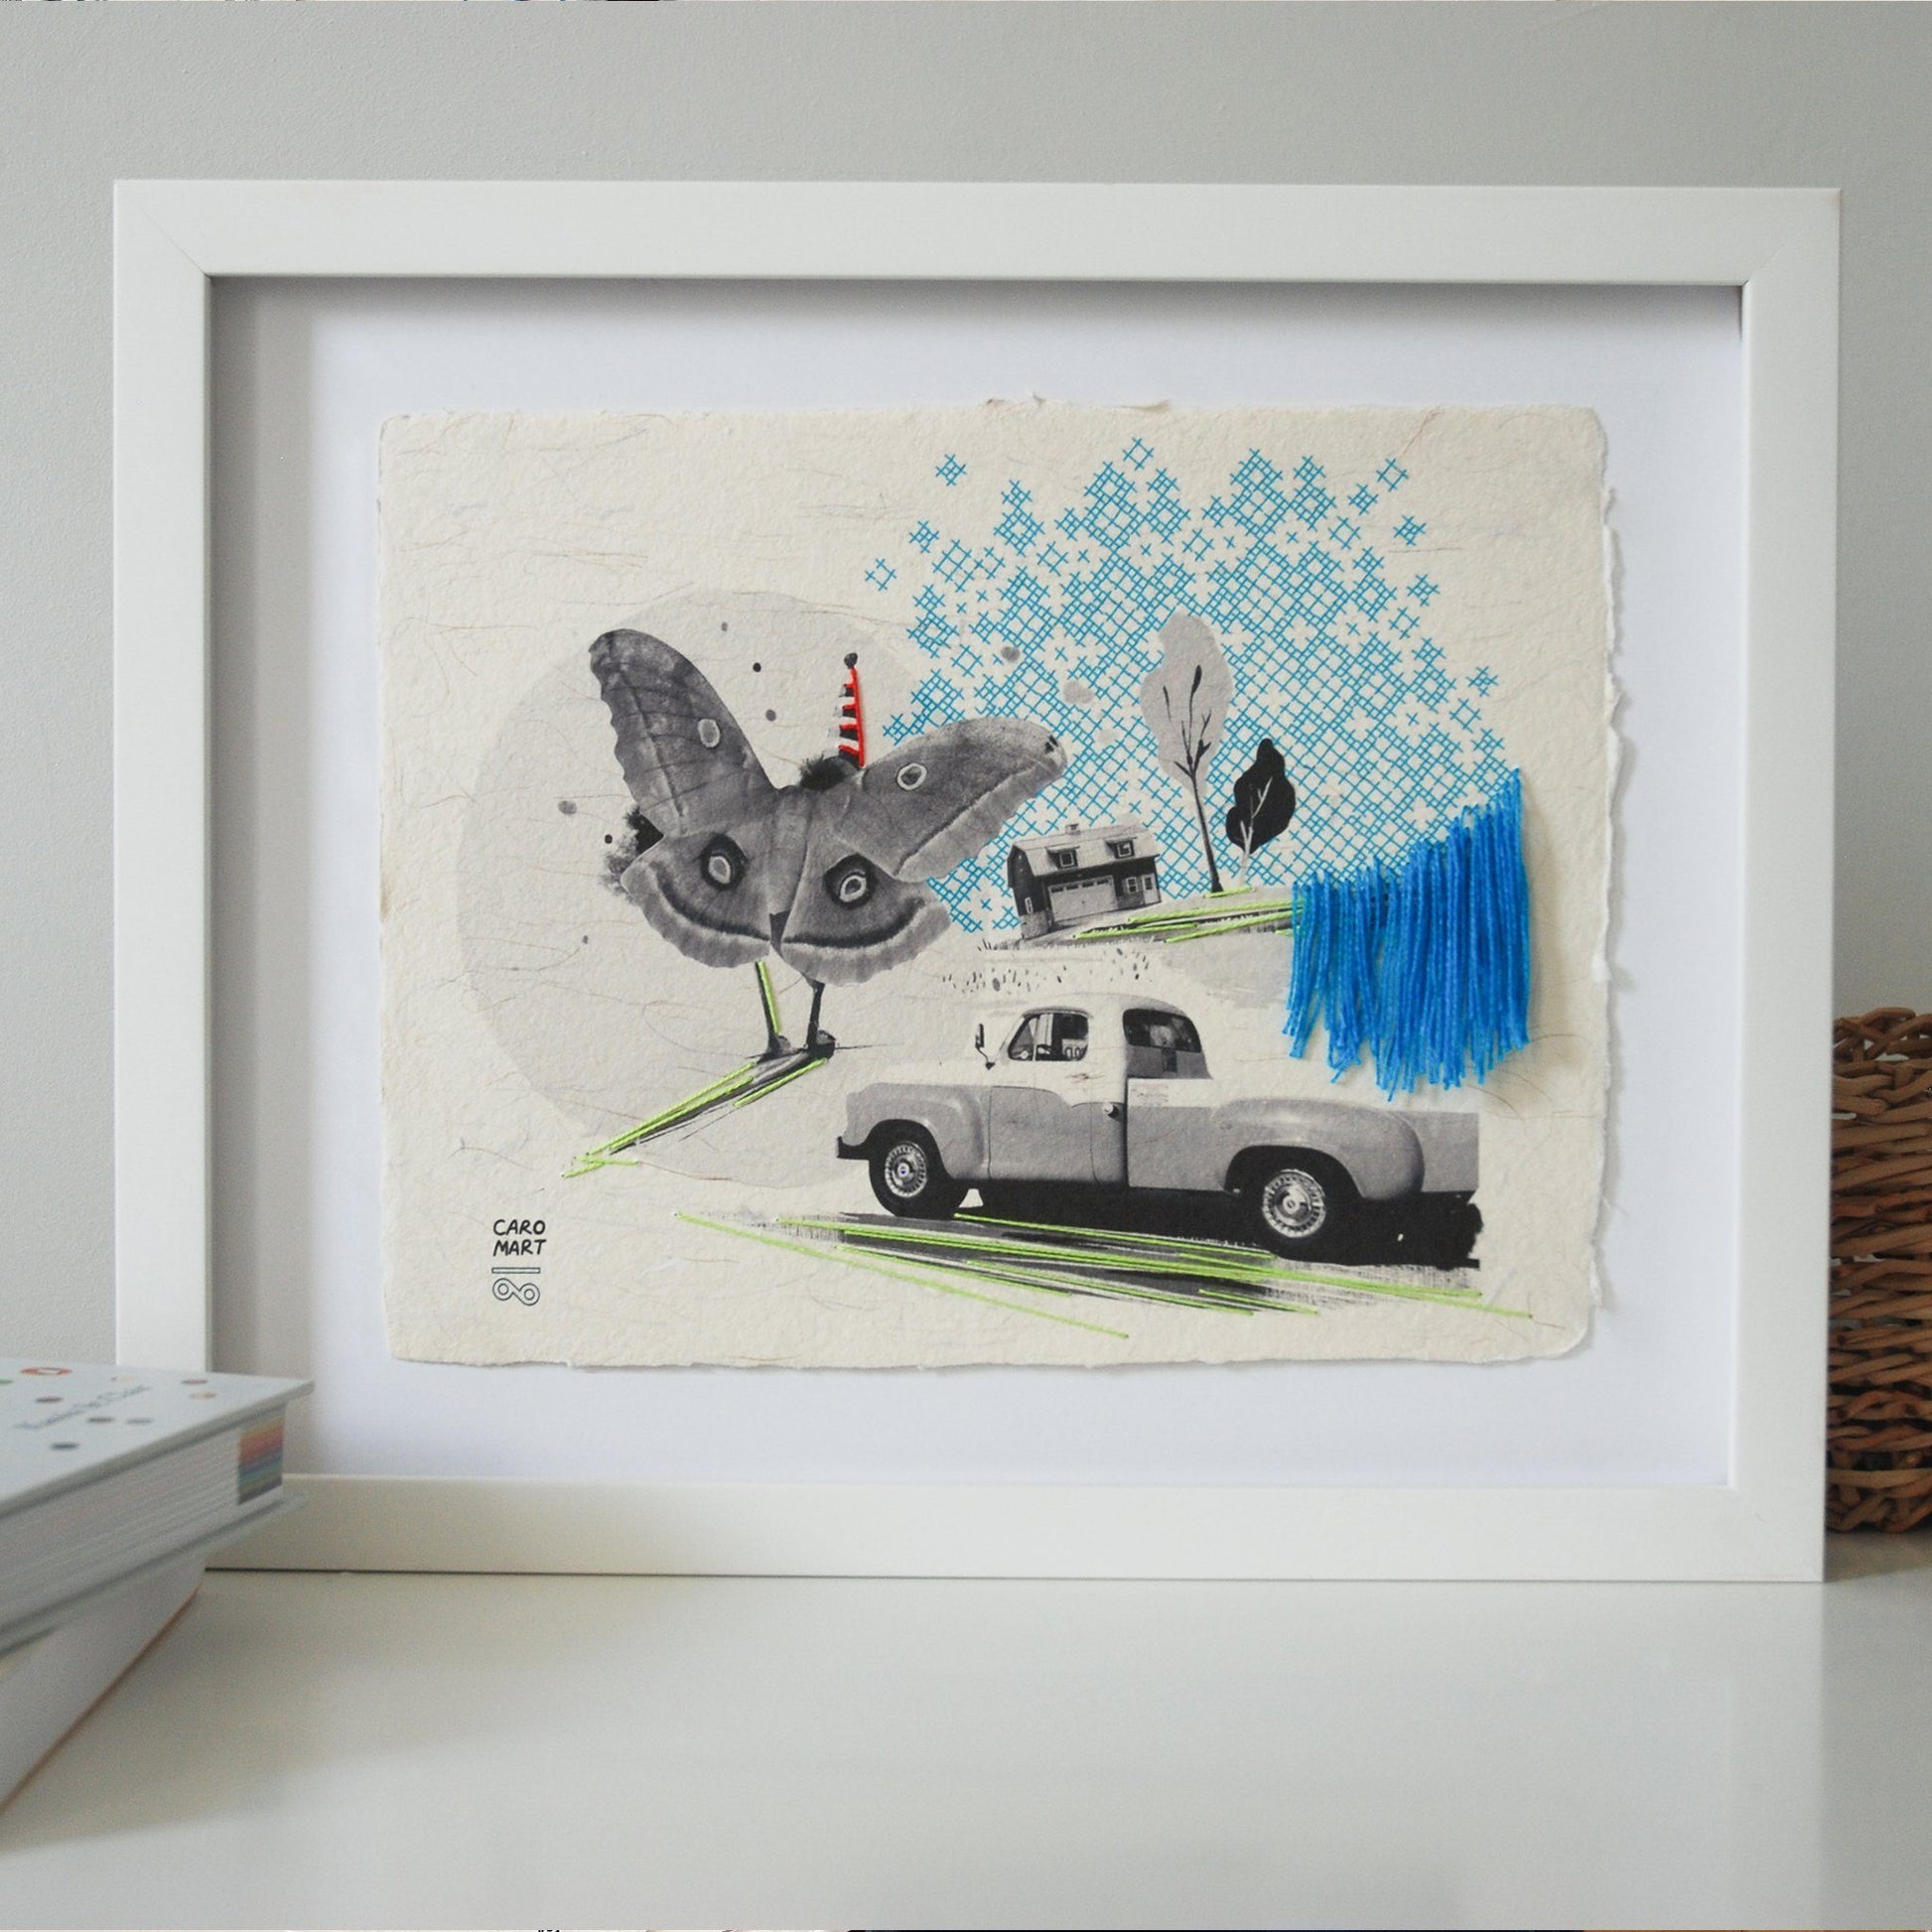 The Moth Illustration: Medium 8.5 x 11 embroidered digital print on handmade paper